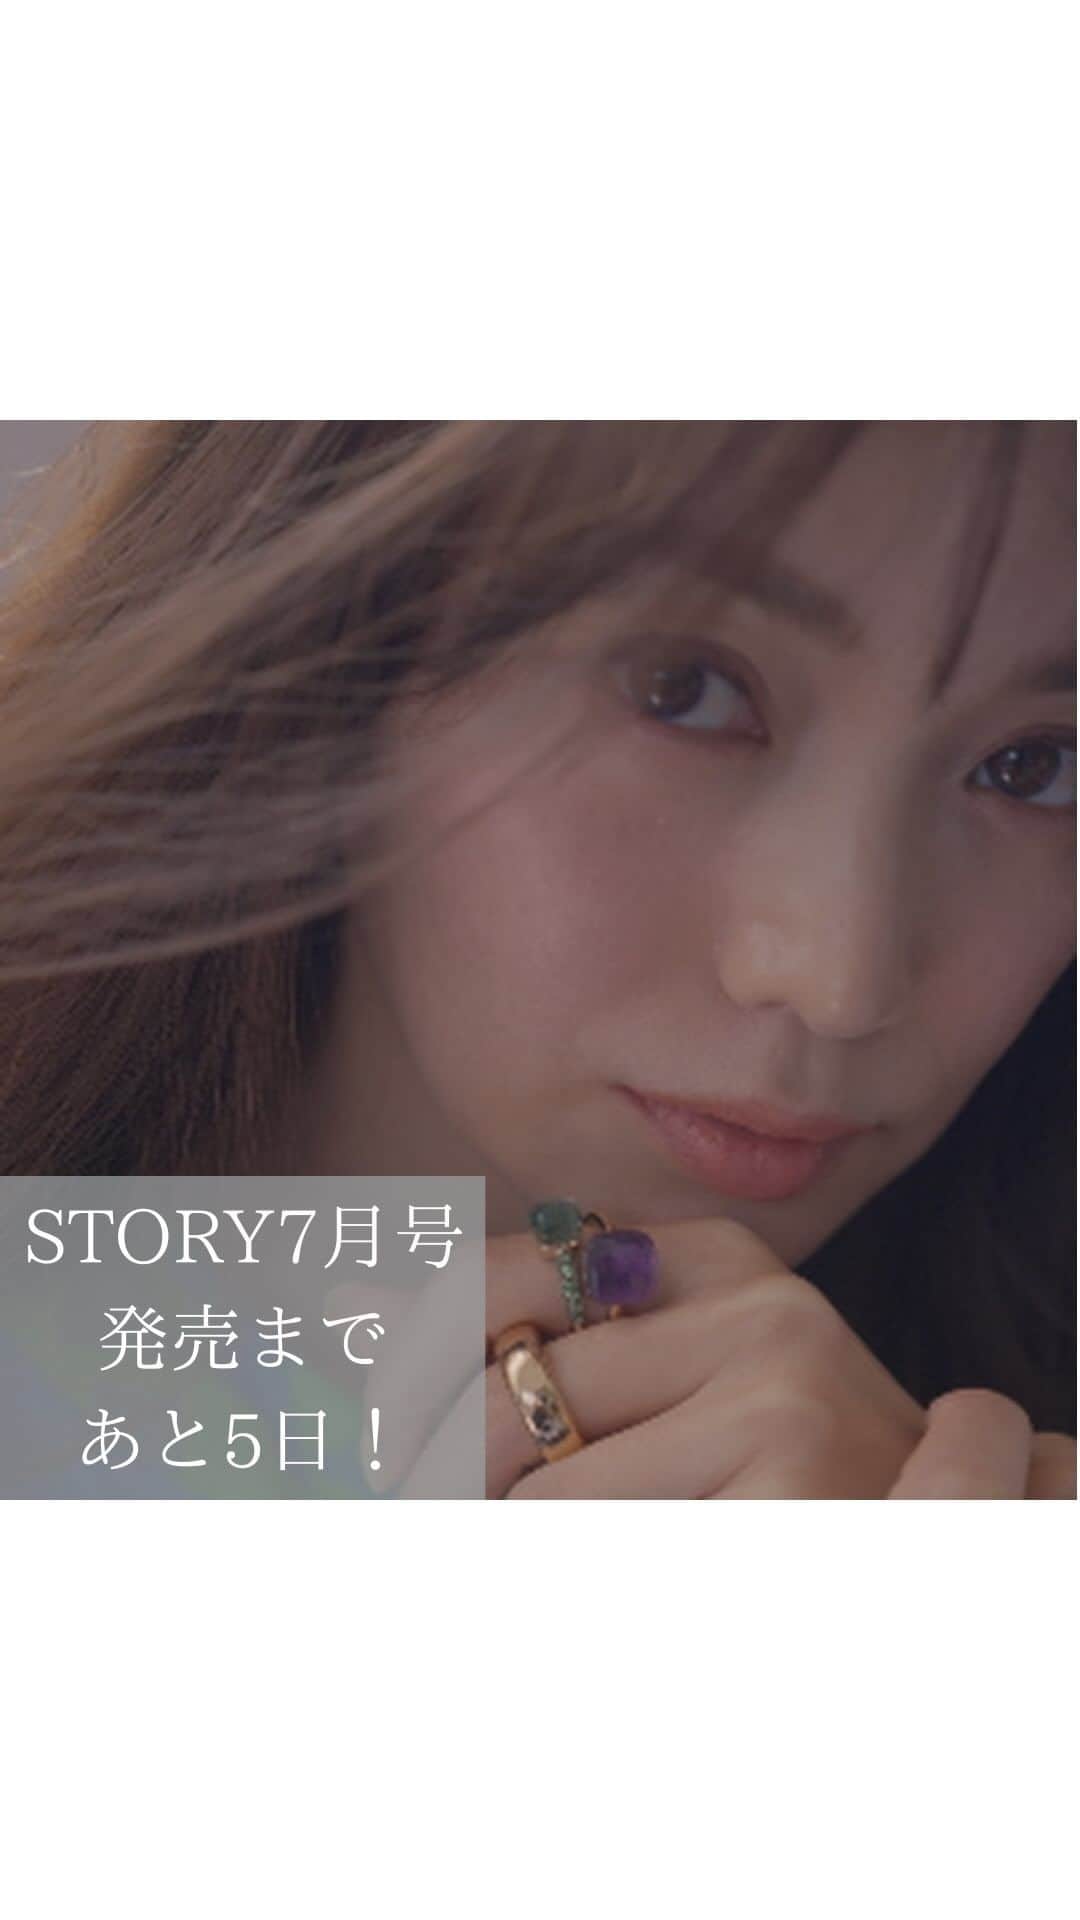 STORY 7月号 Story ストーリィ 超絶男子図鑑 藤井流星 ファッション